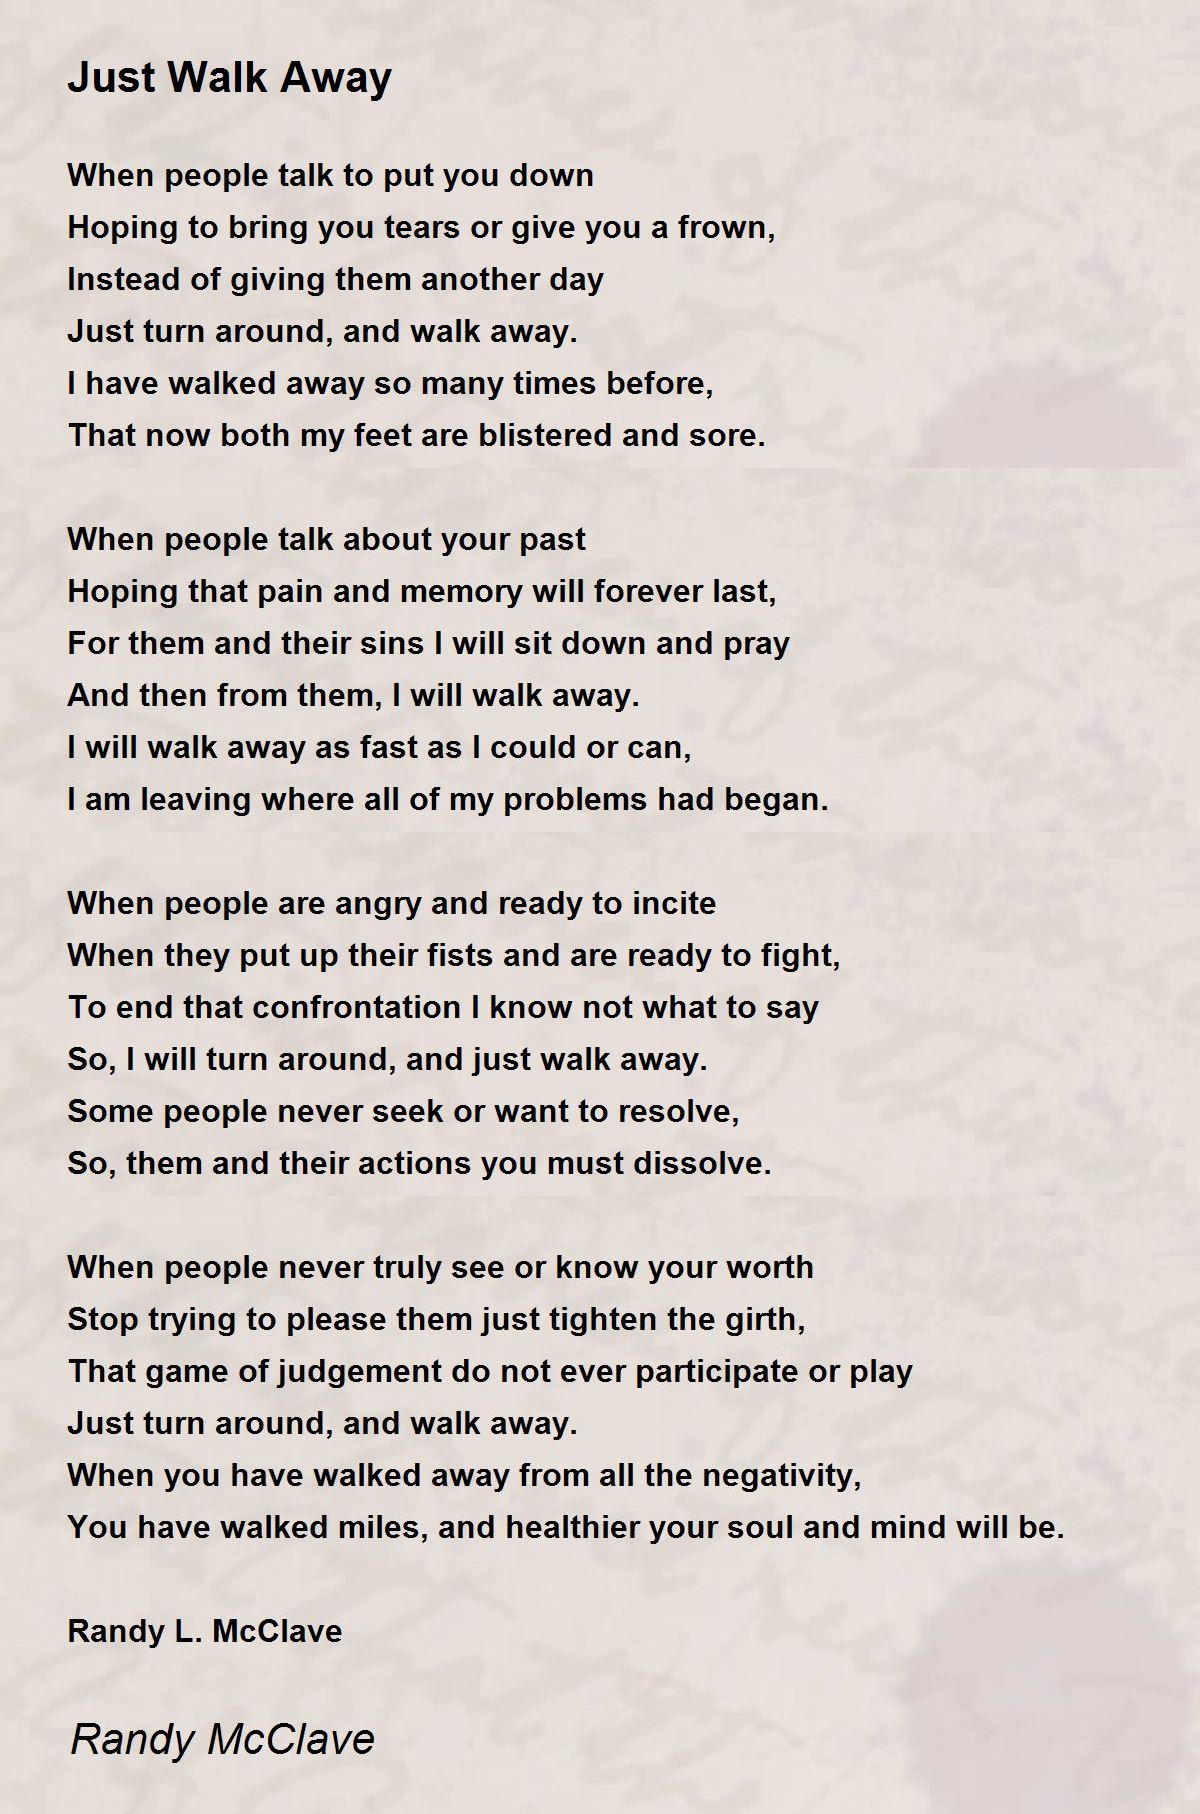 Just Walk Away Poem by Randy McClave - Poem Hunter